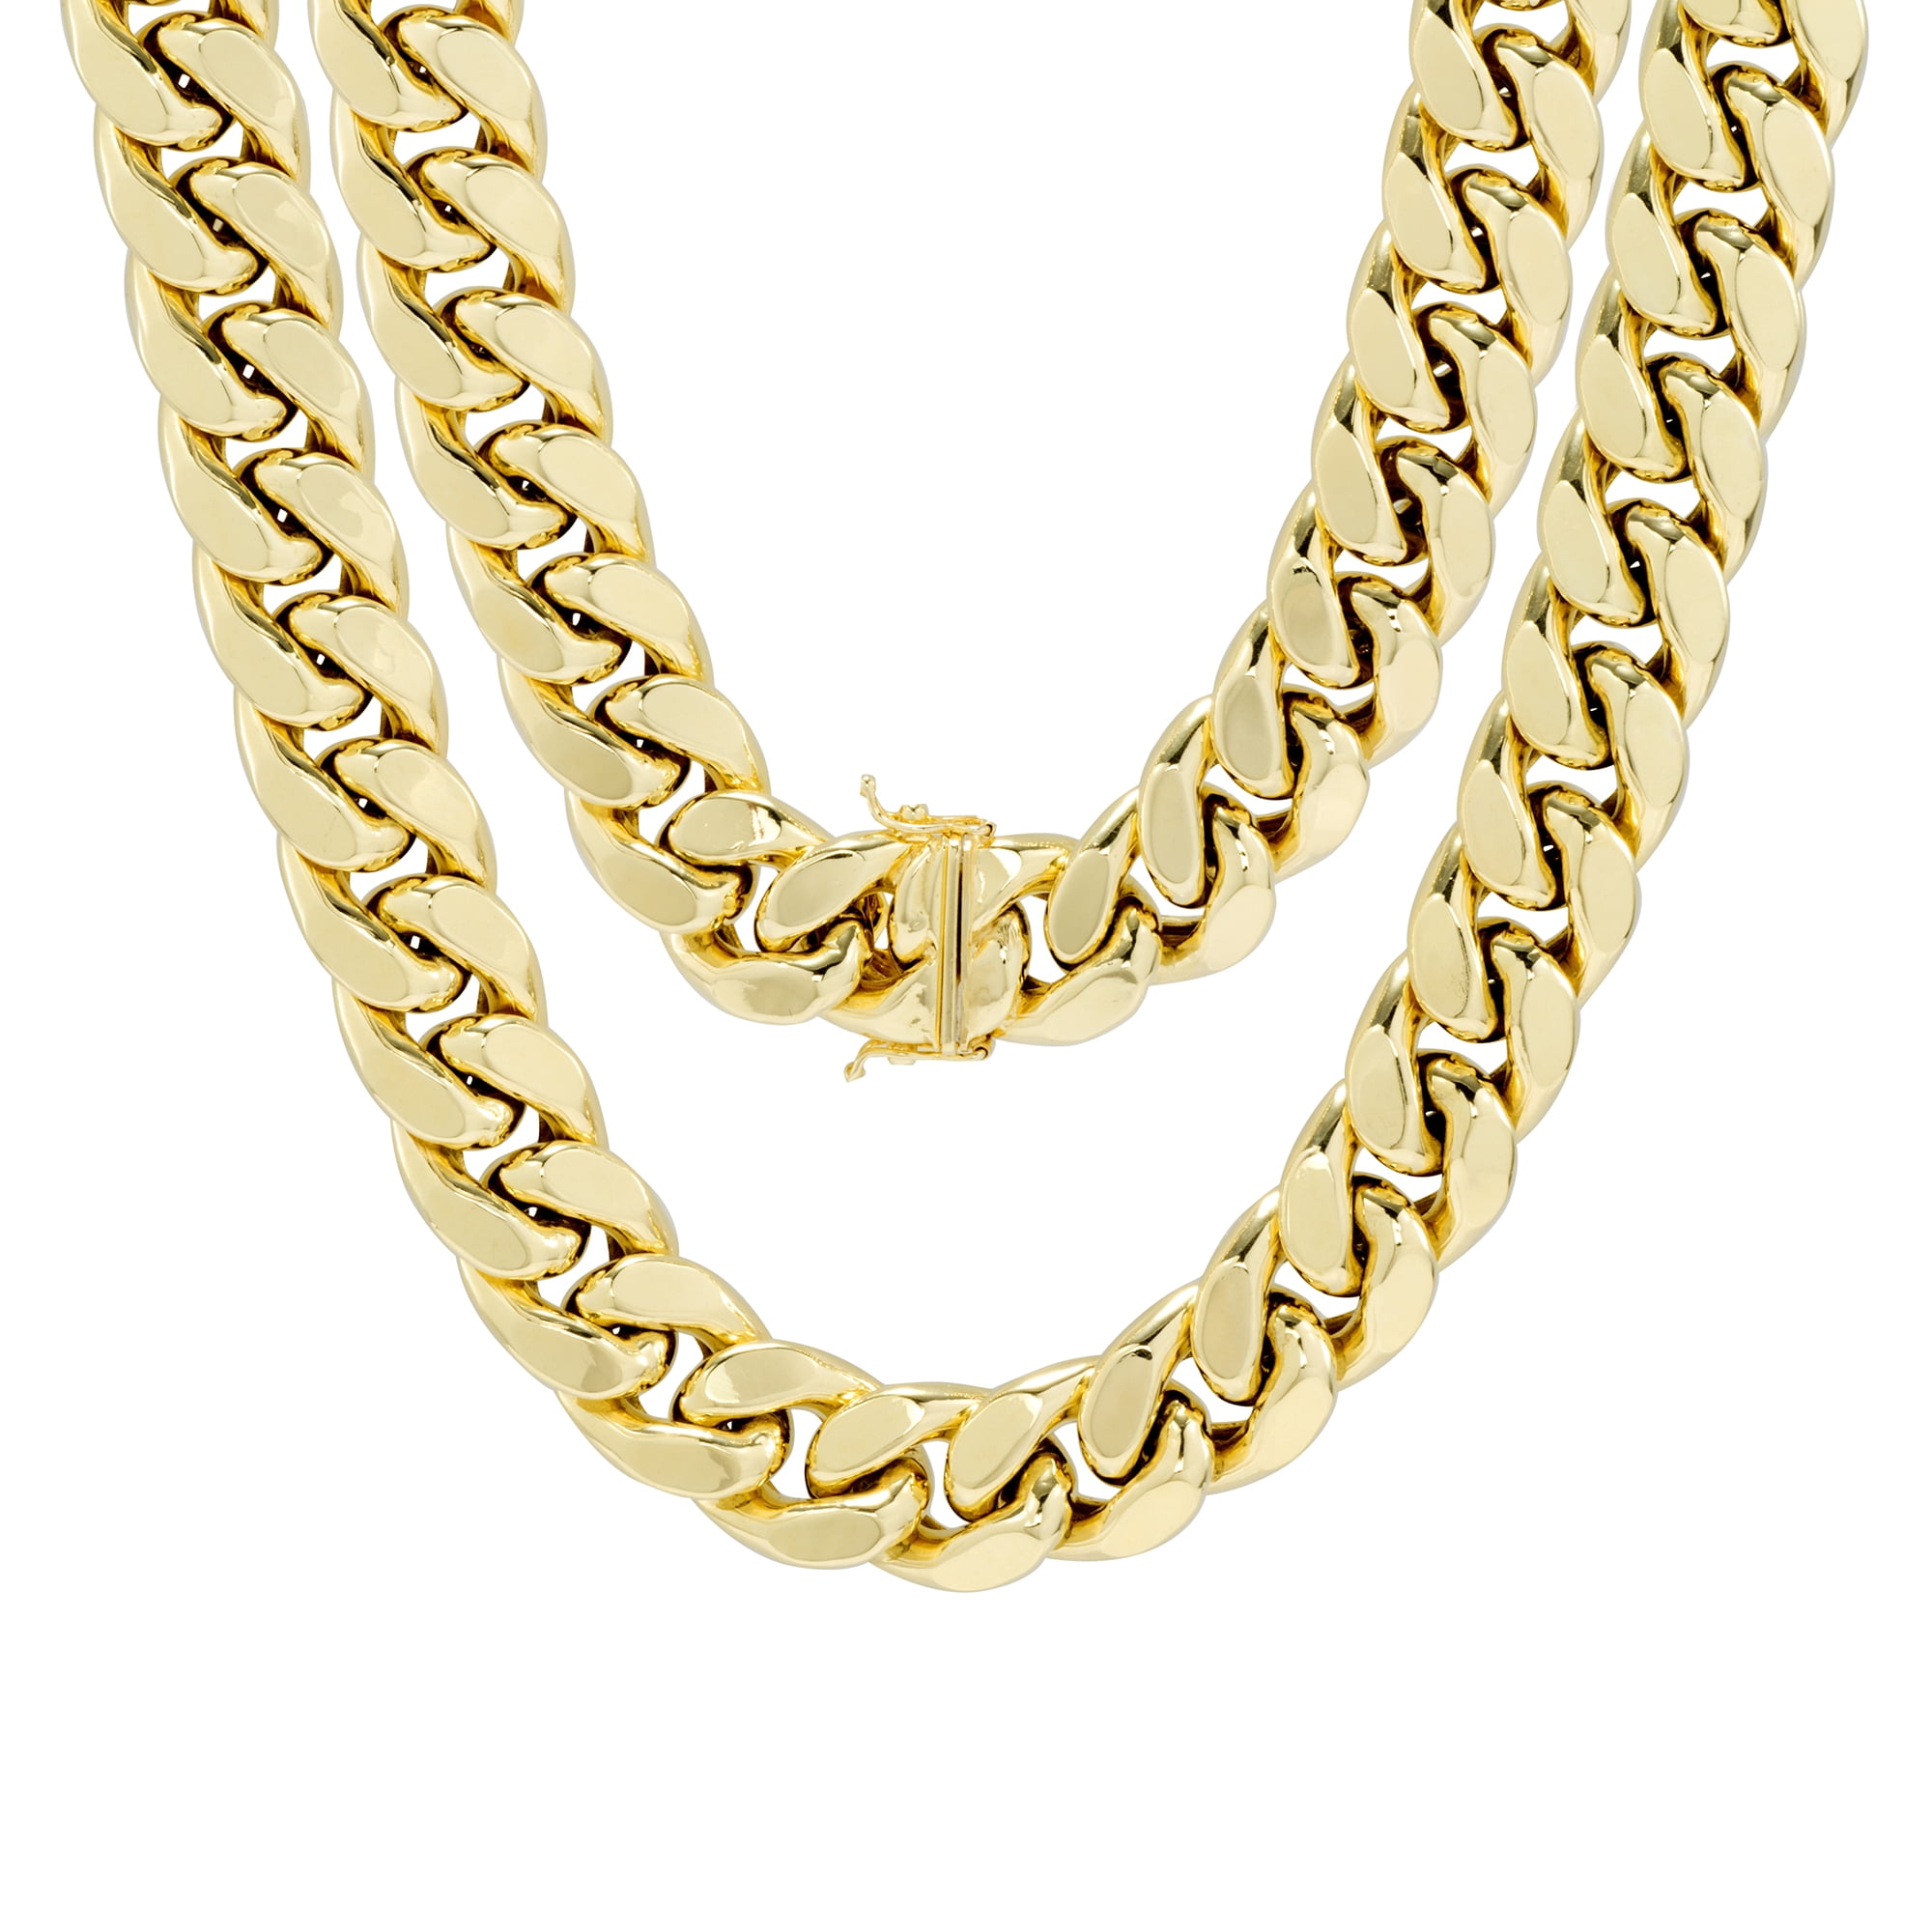 Mia Diamonds 10k Yellow Gold 1.8mm Diamond-Cut Cable Chain Necklace